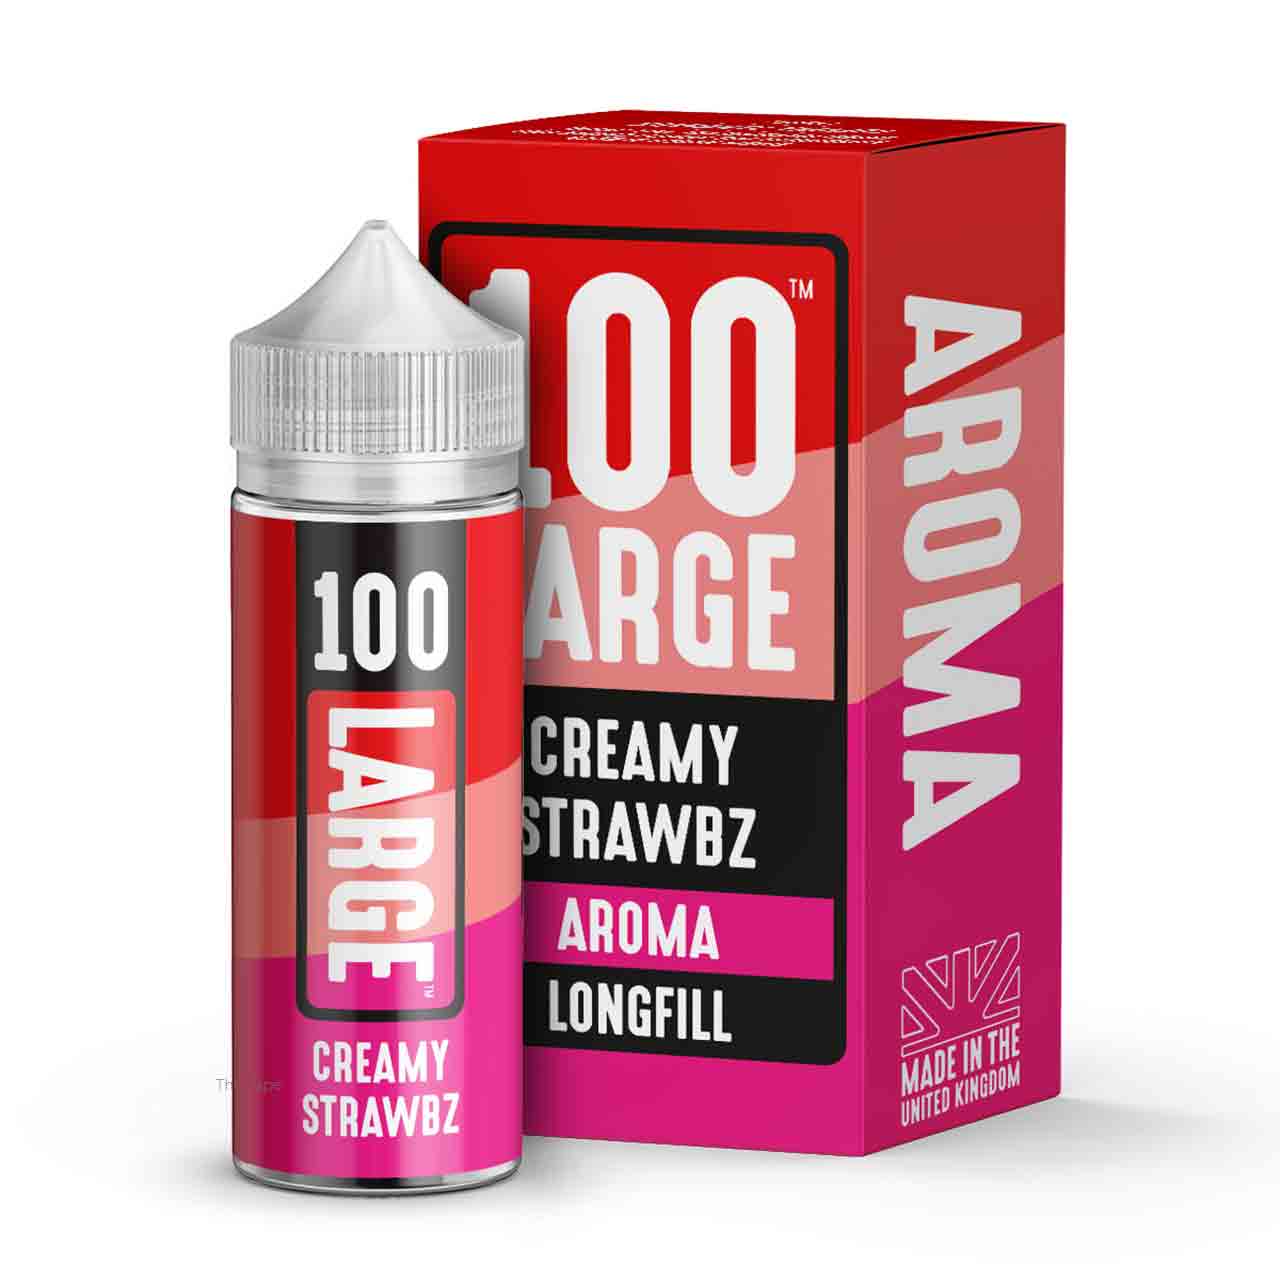 Large Juice 100 Creamy Strawbz Aroma Longfill